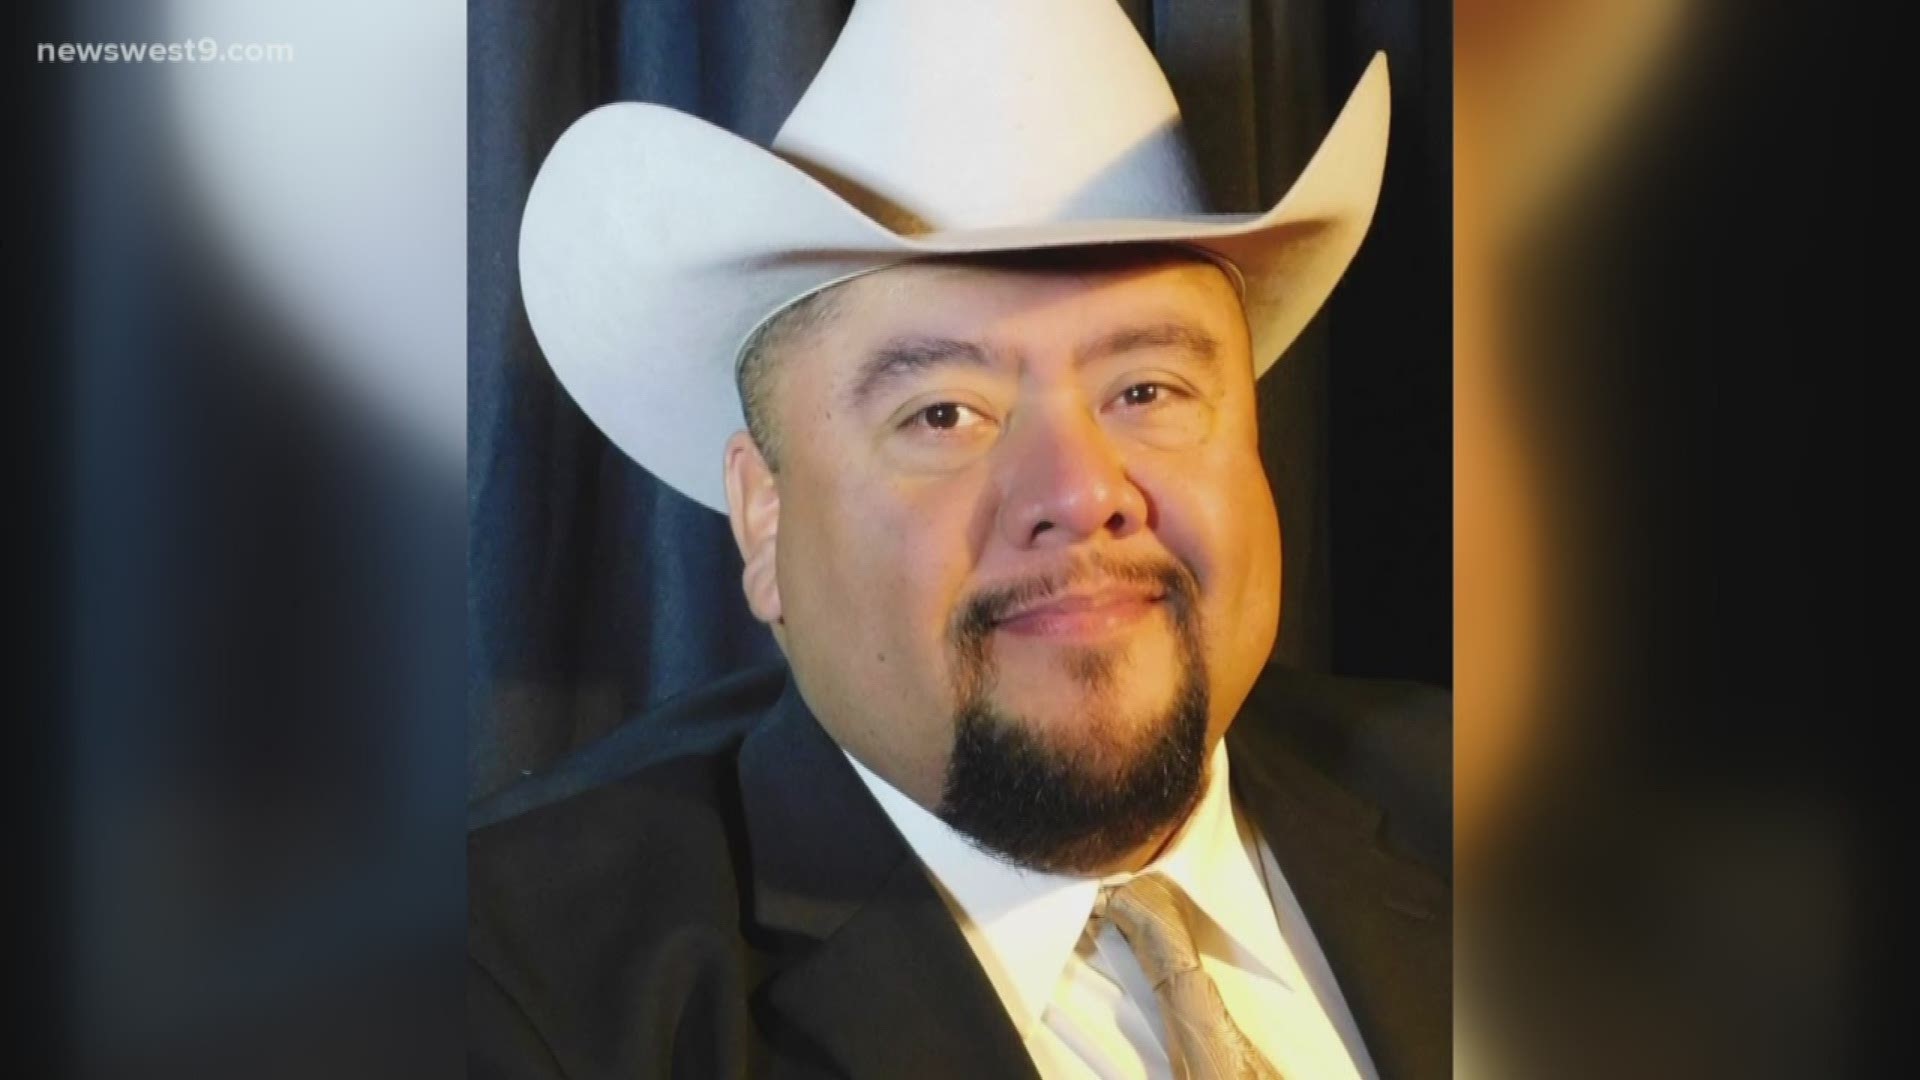 Abraham Vega passed away July 11 according to the Texas Chief Deputies Association.